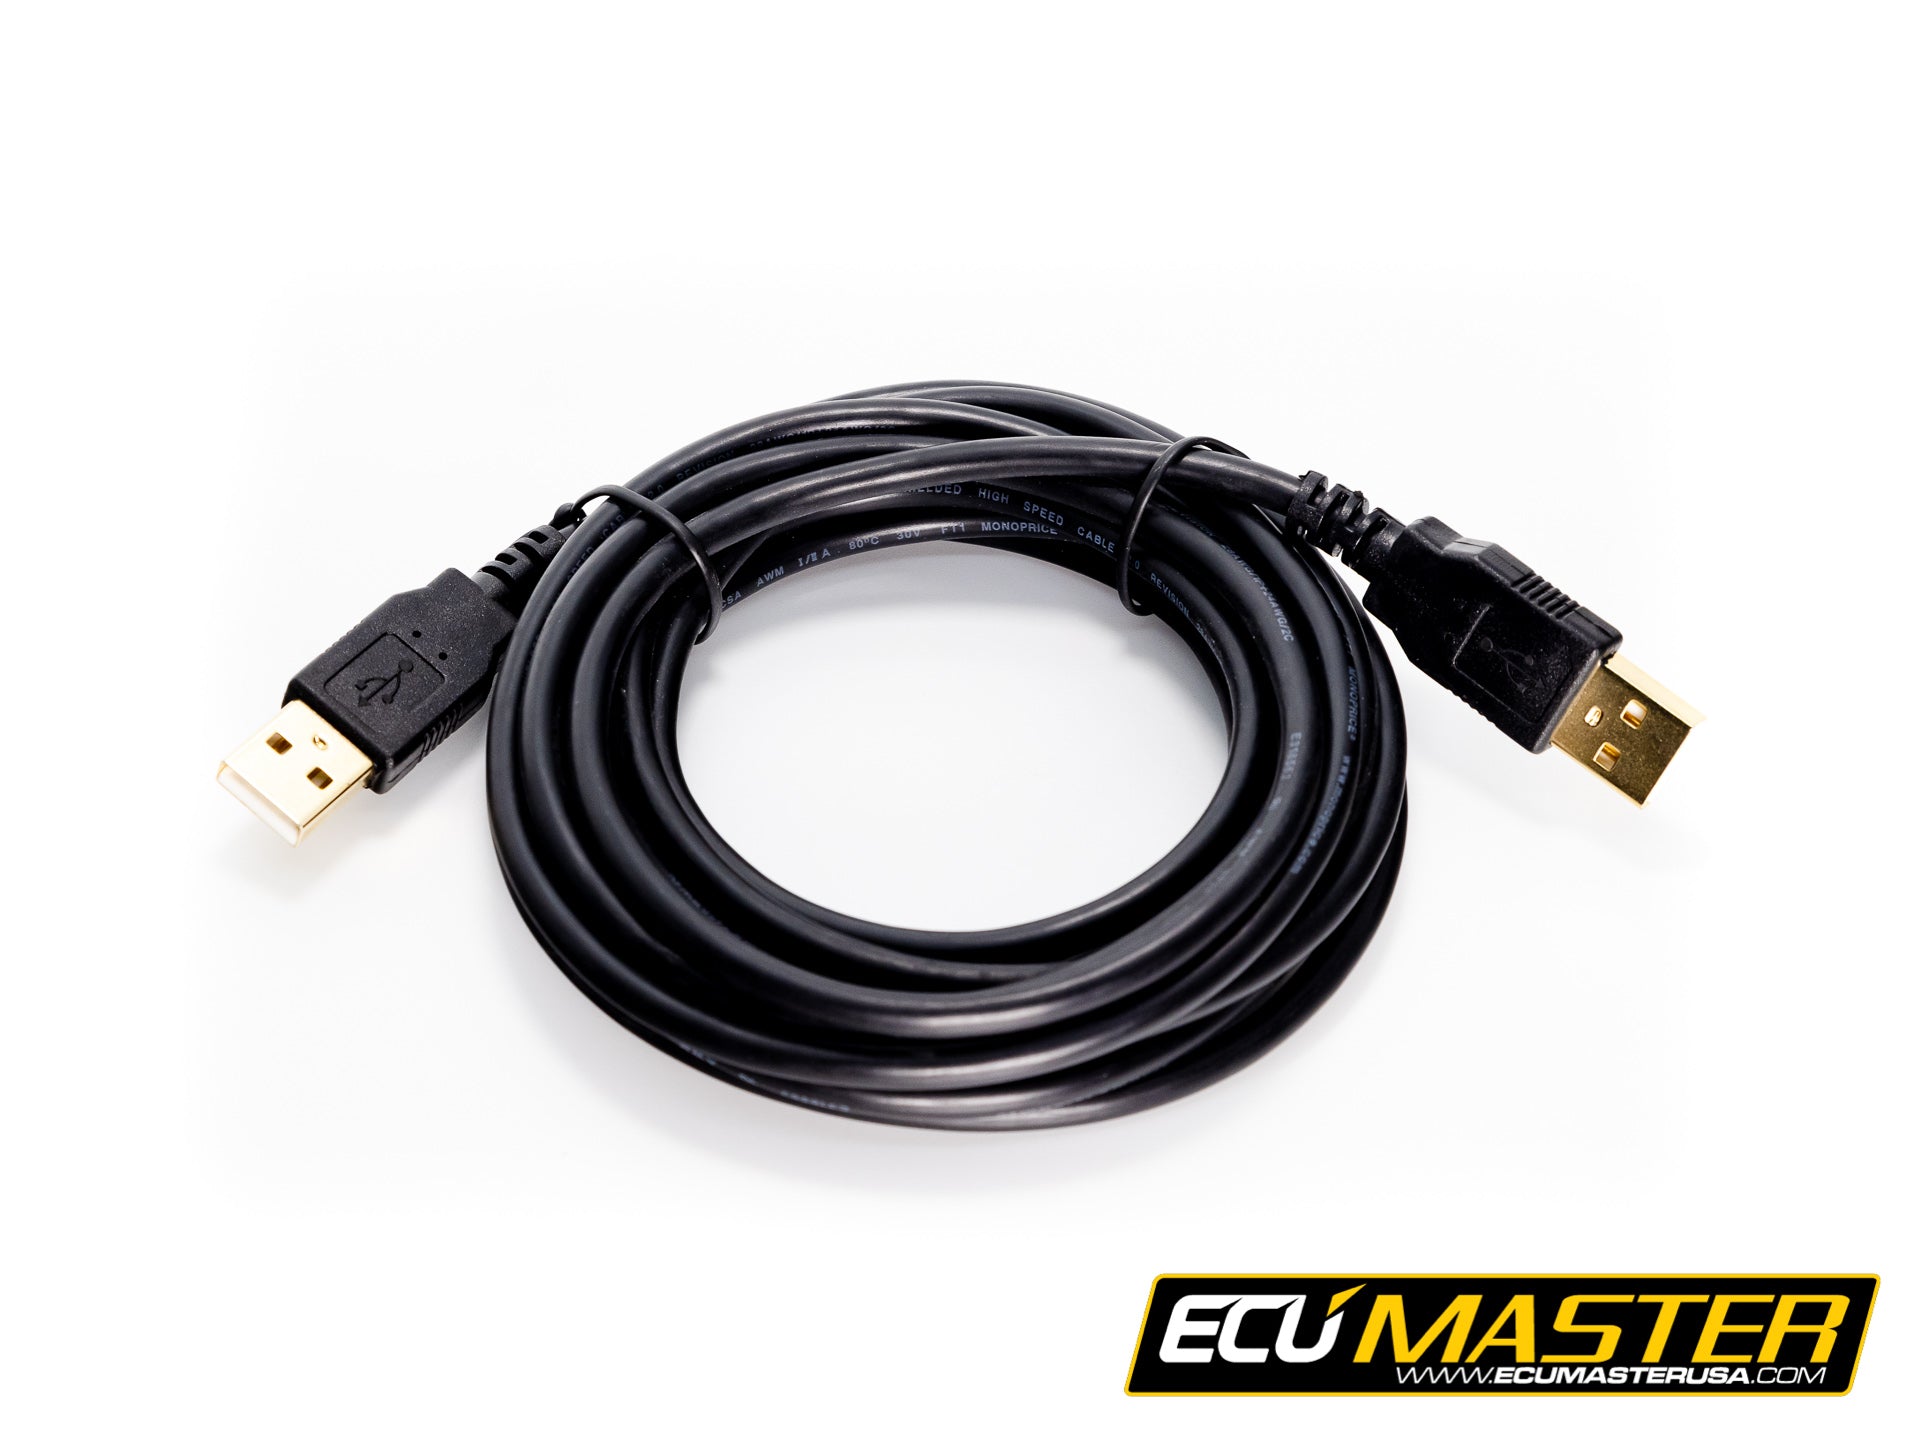 annuleren Bukken Vervoer EMU CLASSIC USB A TO USB A Male-Male Cable – ECUMaster USA